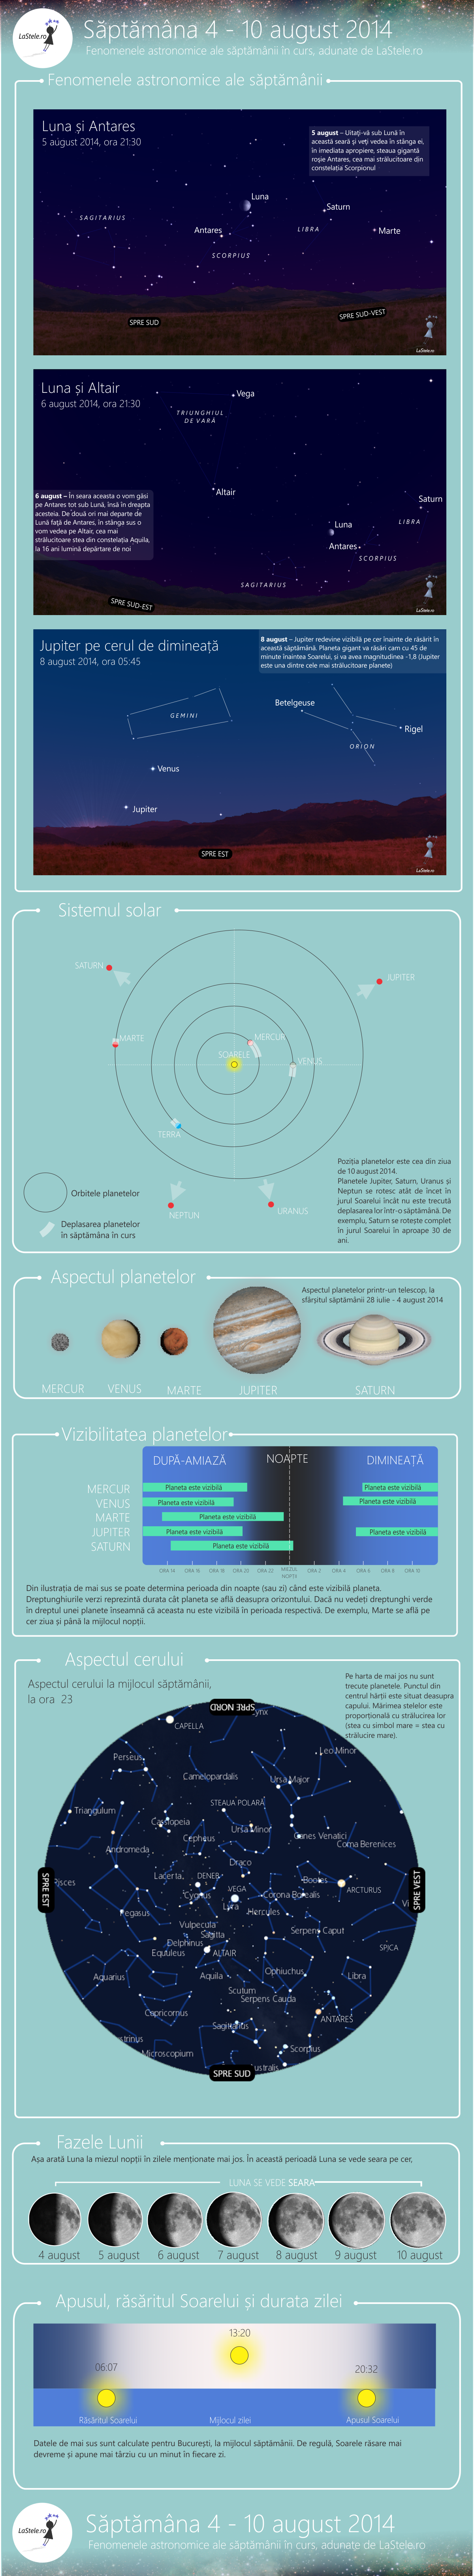 lastele-ro-infografic-evenimente-astronomice-4-10-august-2014